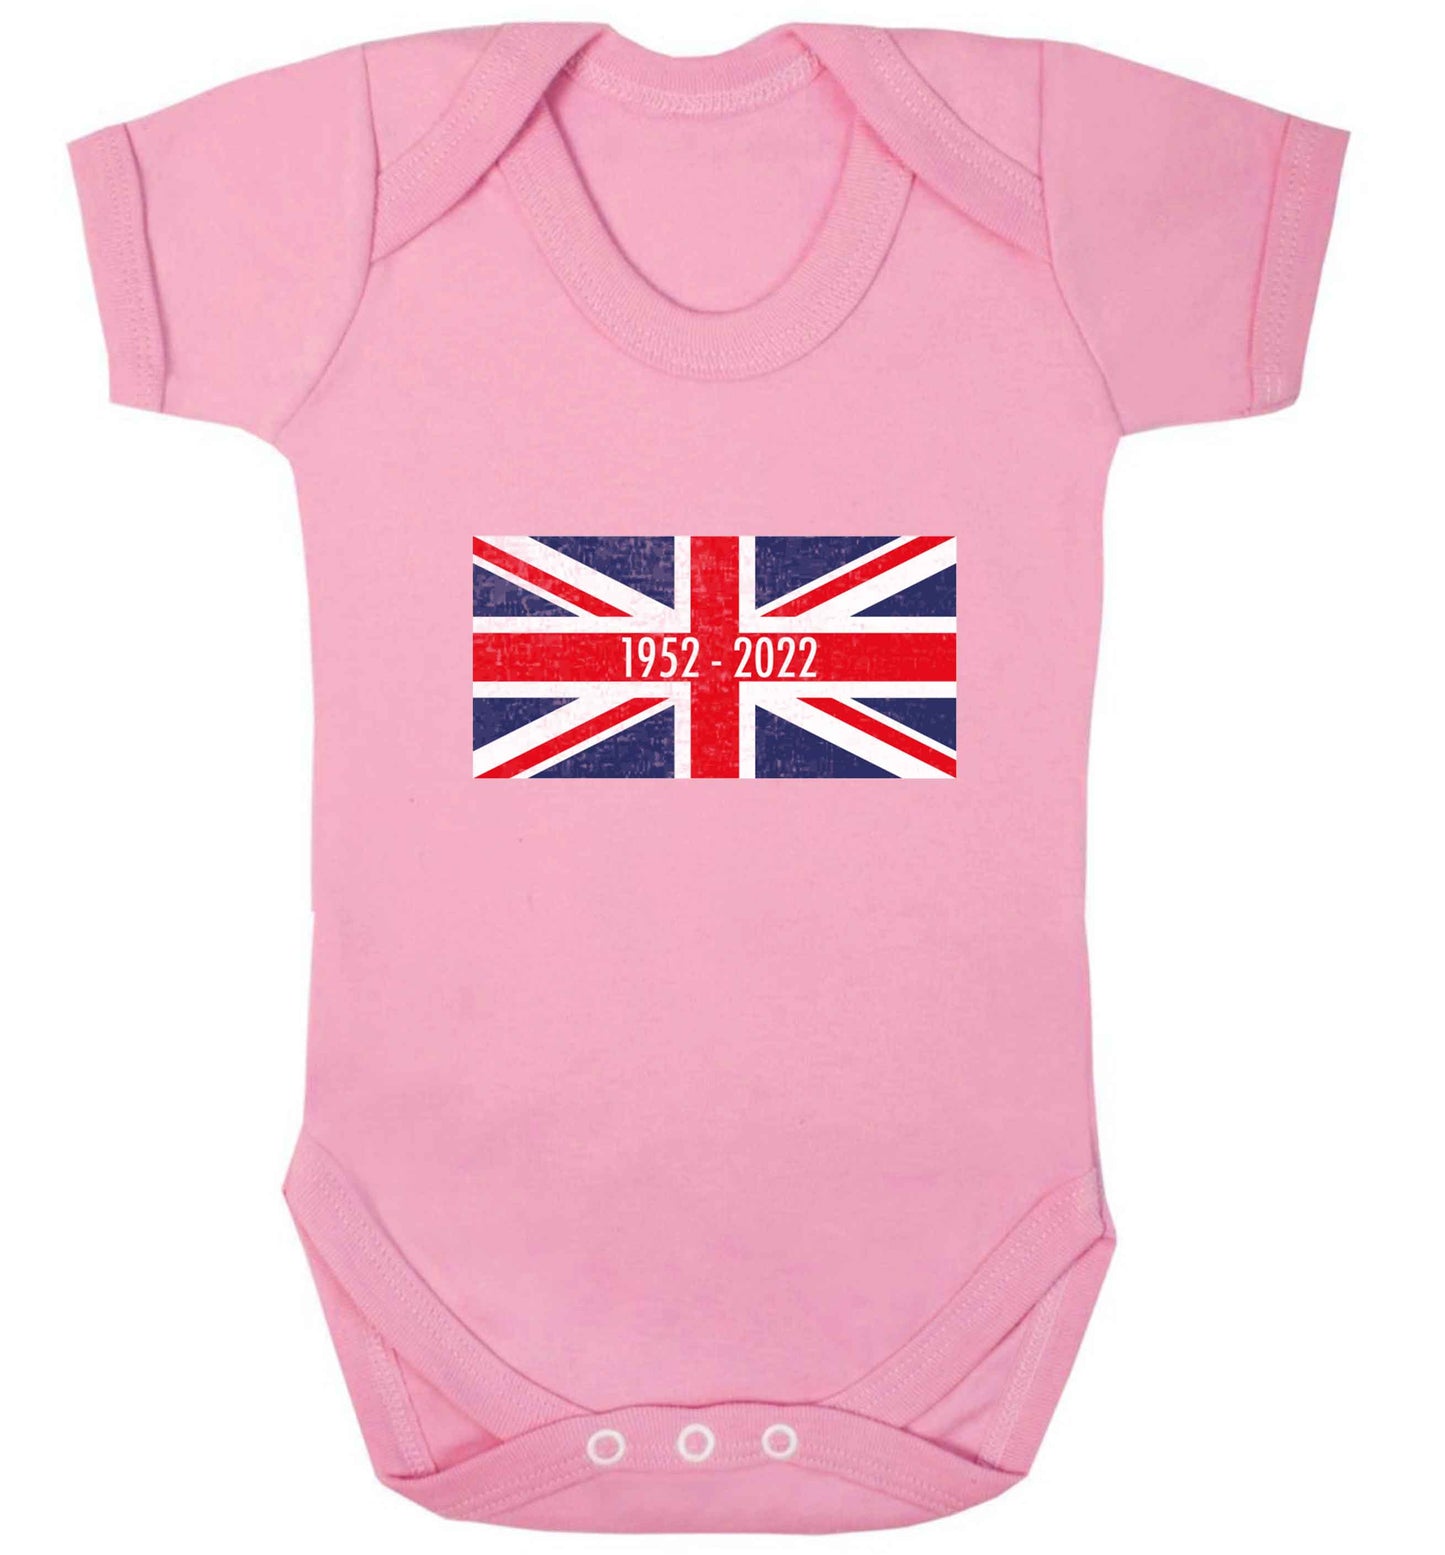 British flag Queens jubilee baby vest pale pink 18-24 months